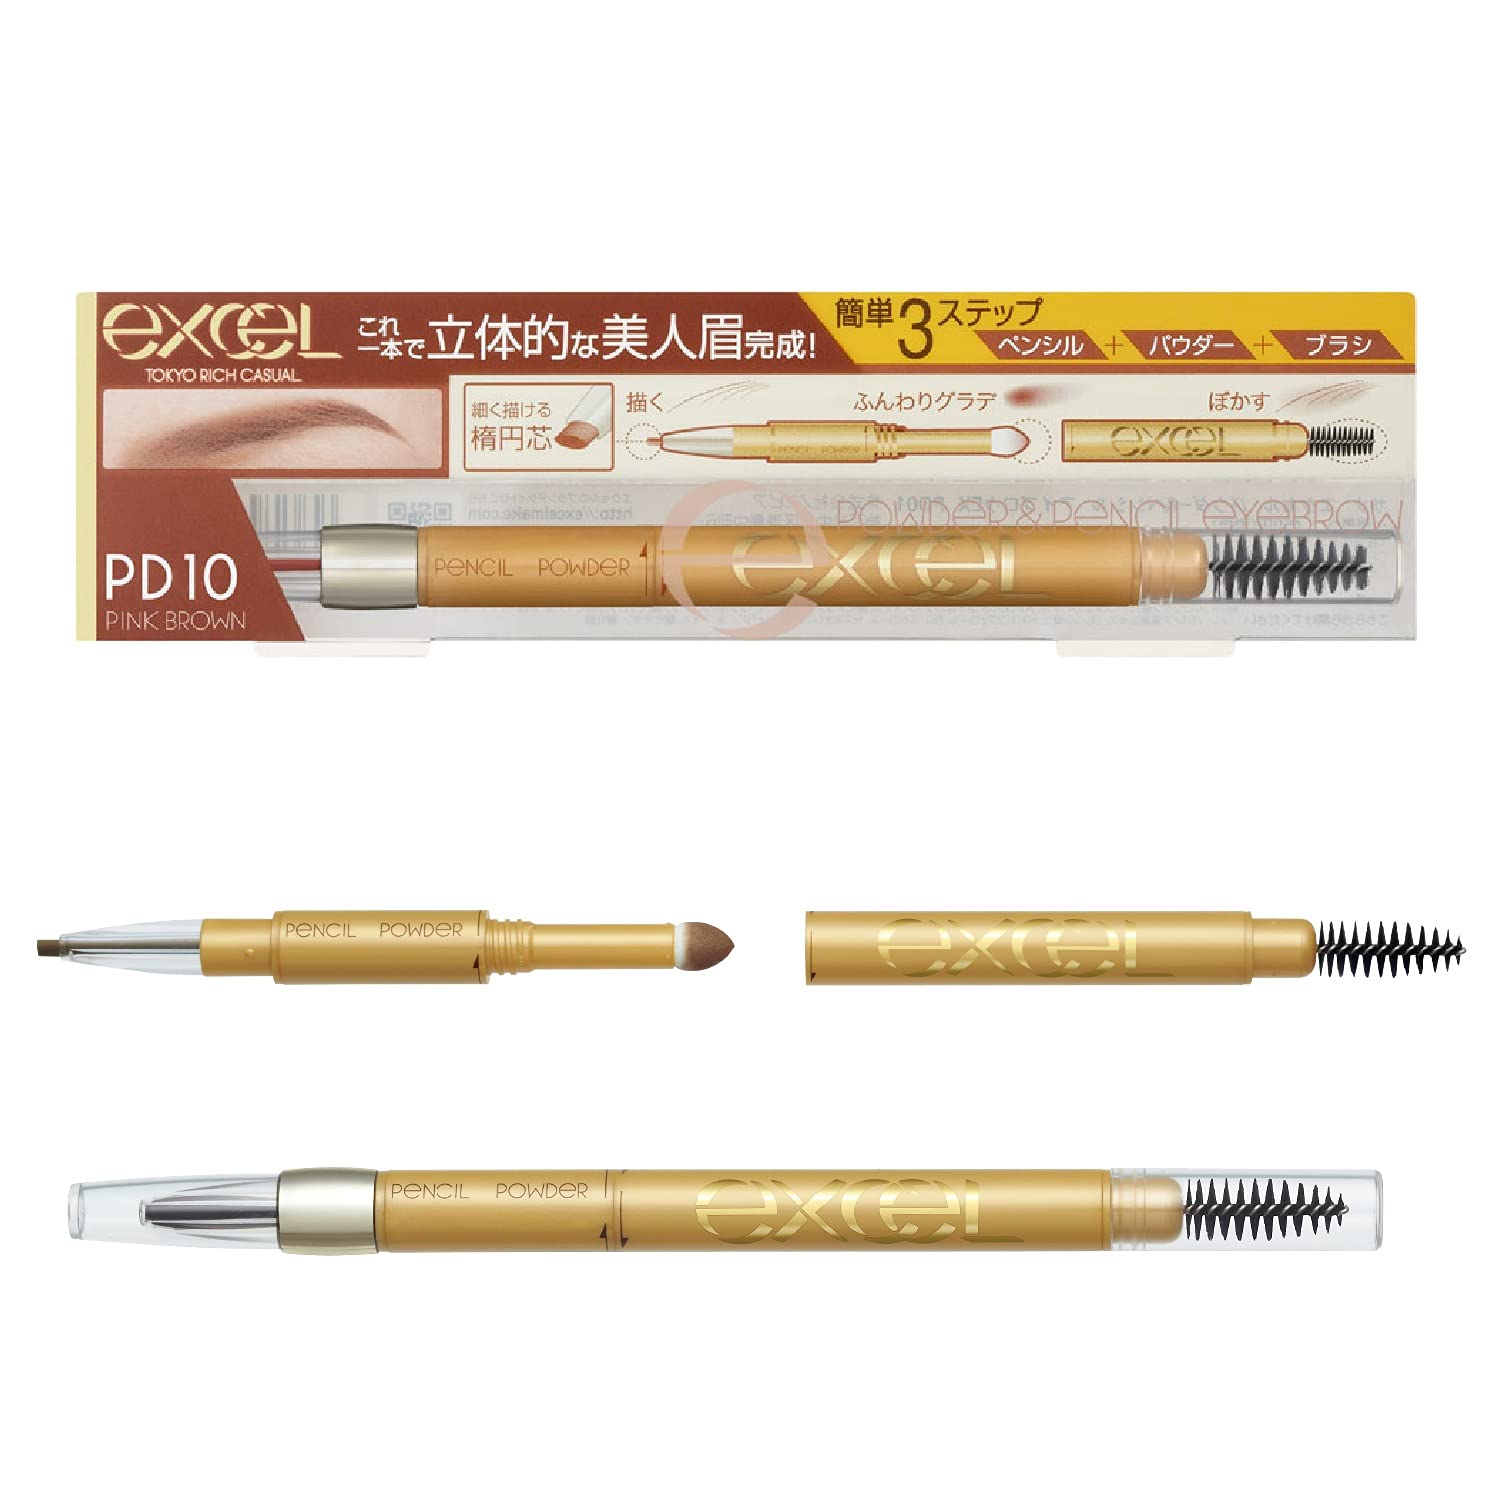 EXCEL Powder & Pencil Eyebrow PD10 Pink Brown